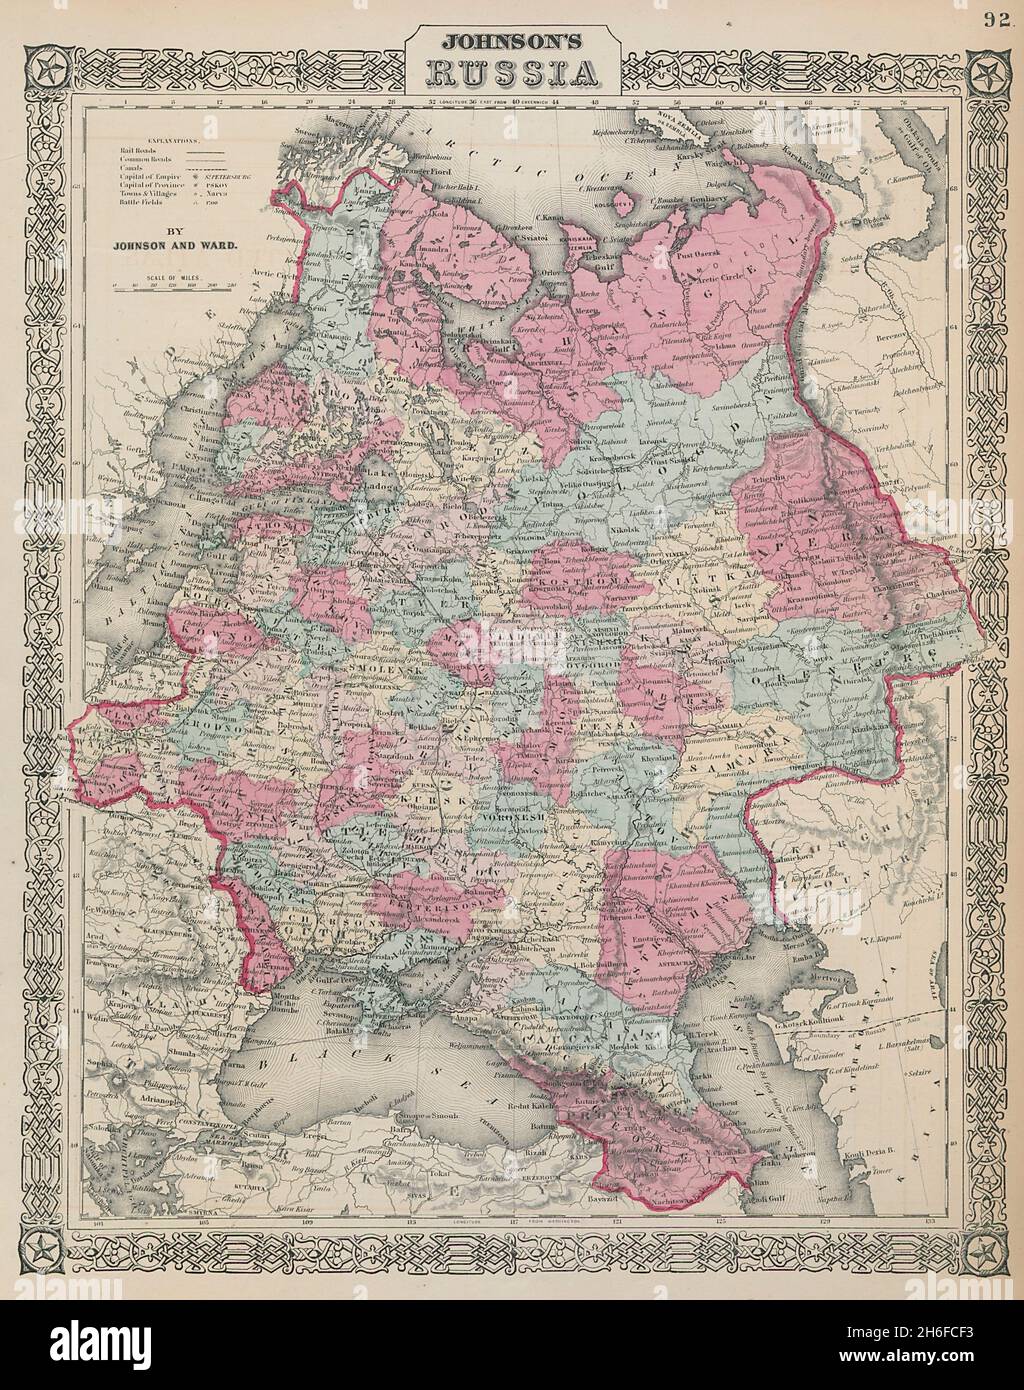 Johnson's Russia in Europe. Ukraine Poland Baltics Finland Caucasus 1865 map Stock Photo